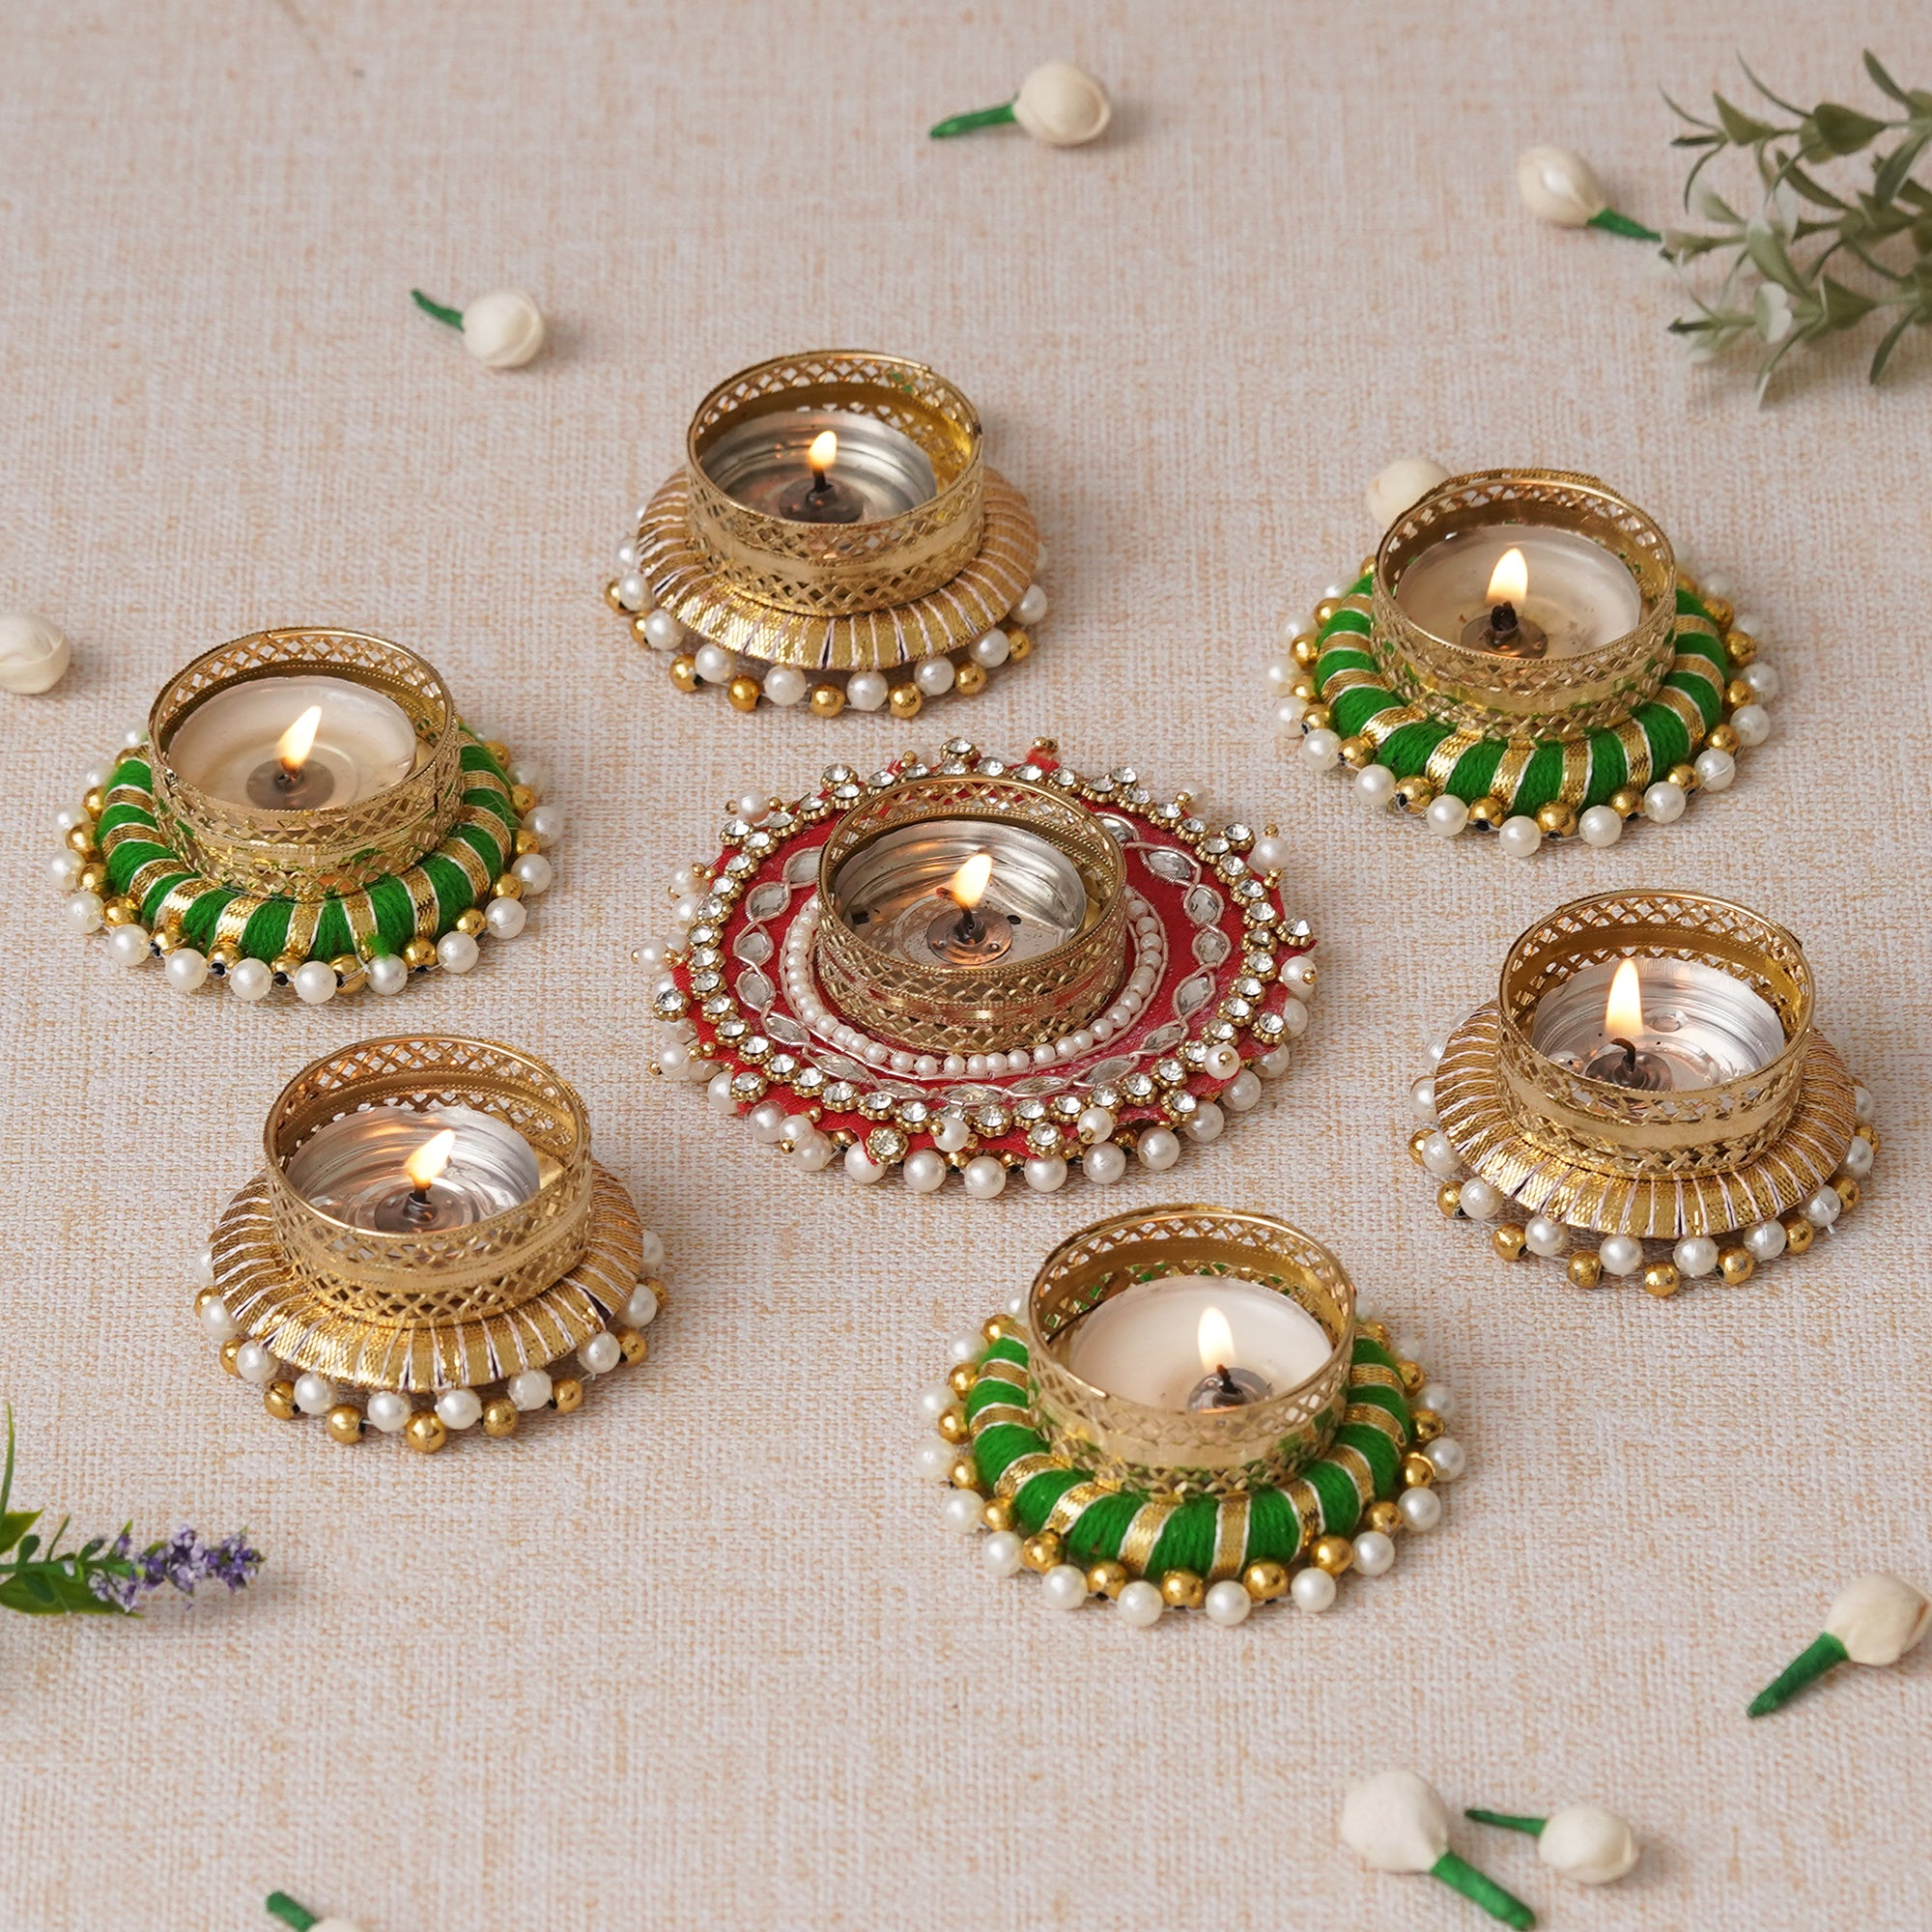 eCraftIndia Set of 7 Round Shaped Diamond Beads and Pearls Decorative Tea Light Candle Holders 1